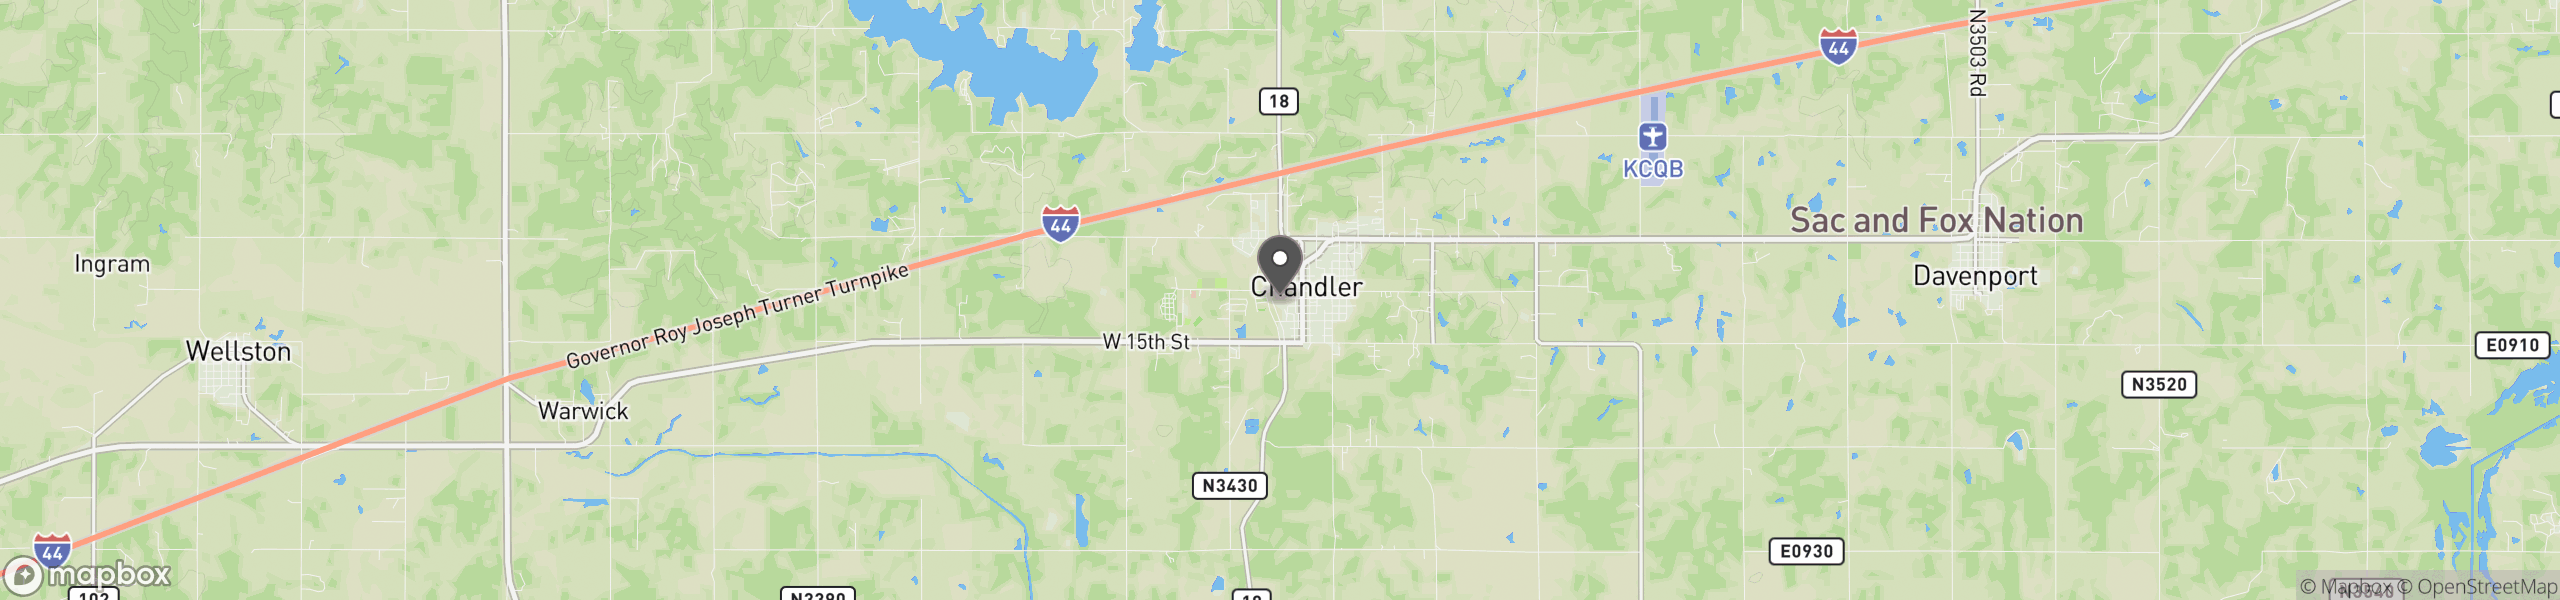 Chandler, OK 74834